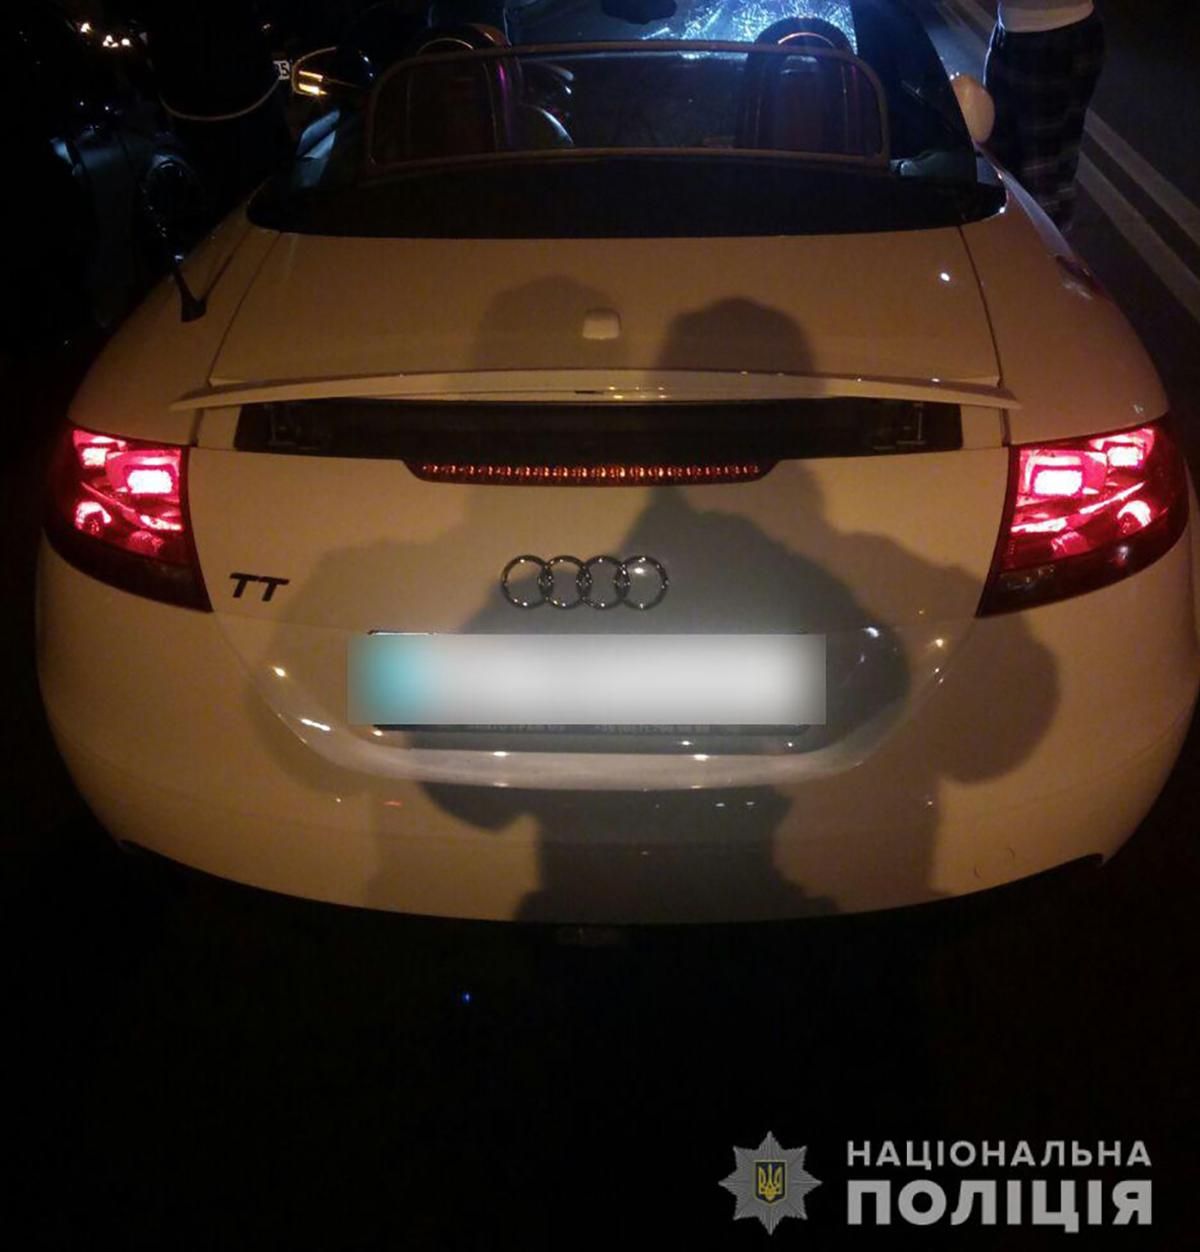 ДТП в Харькове на Сумской - 23-летняя девушка сбила пешеходов на тротуаре